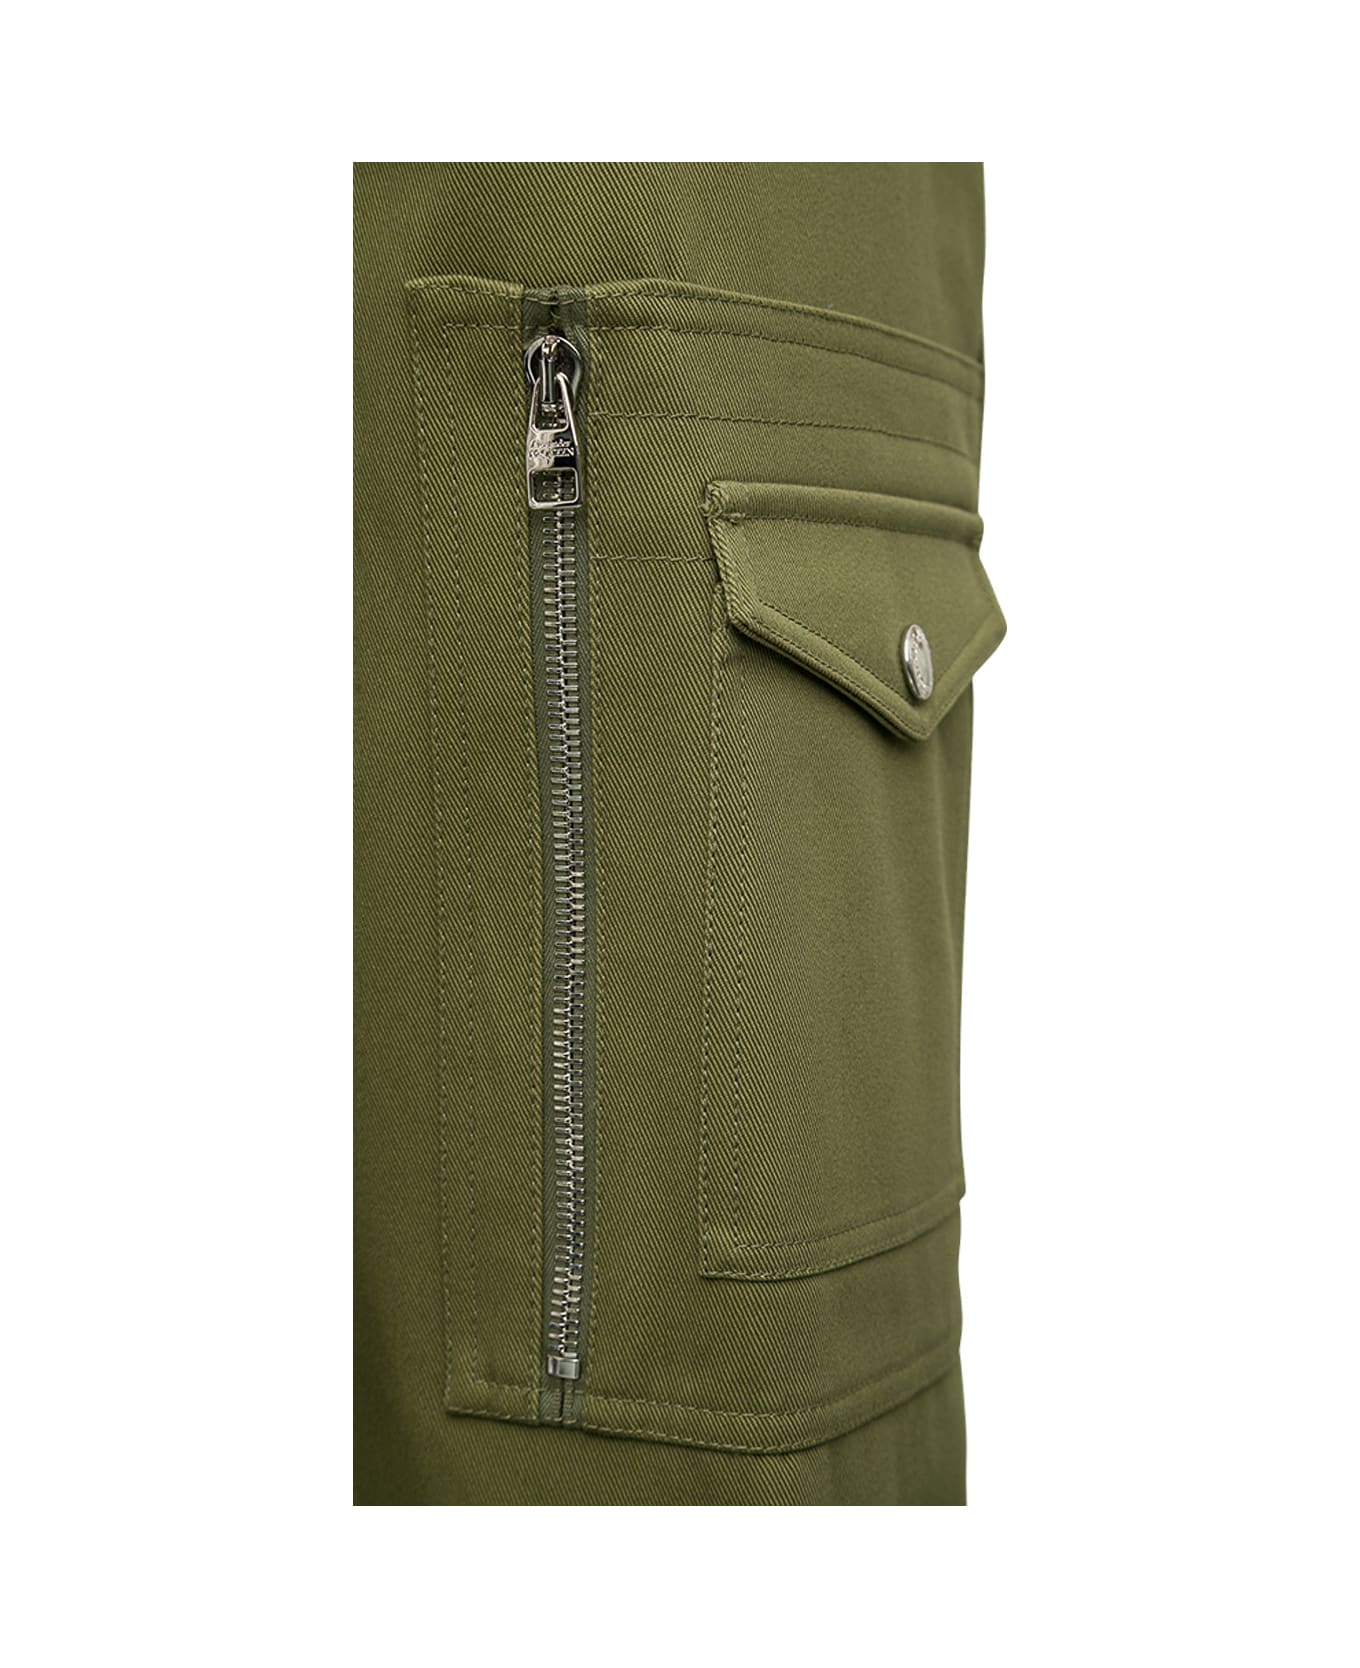 Alexander McQueen Green Cotton Pants With Pockets - Green